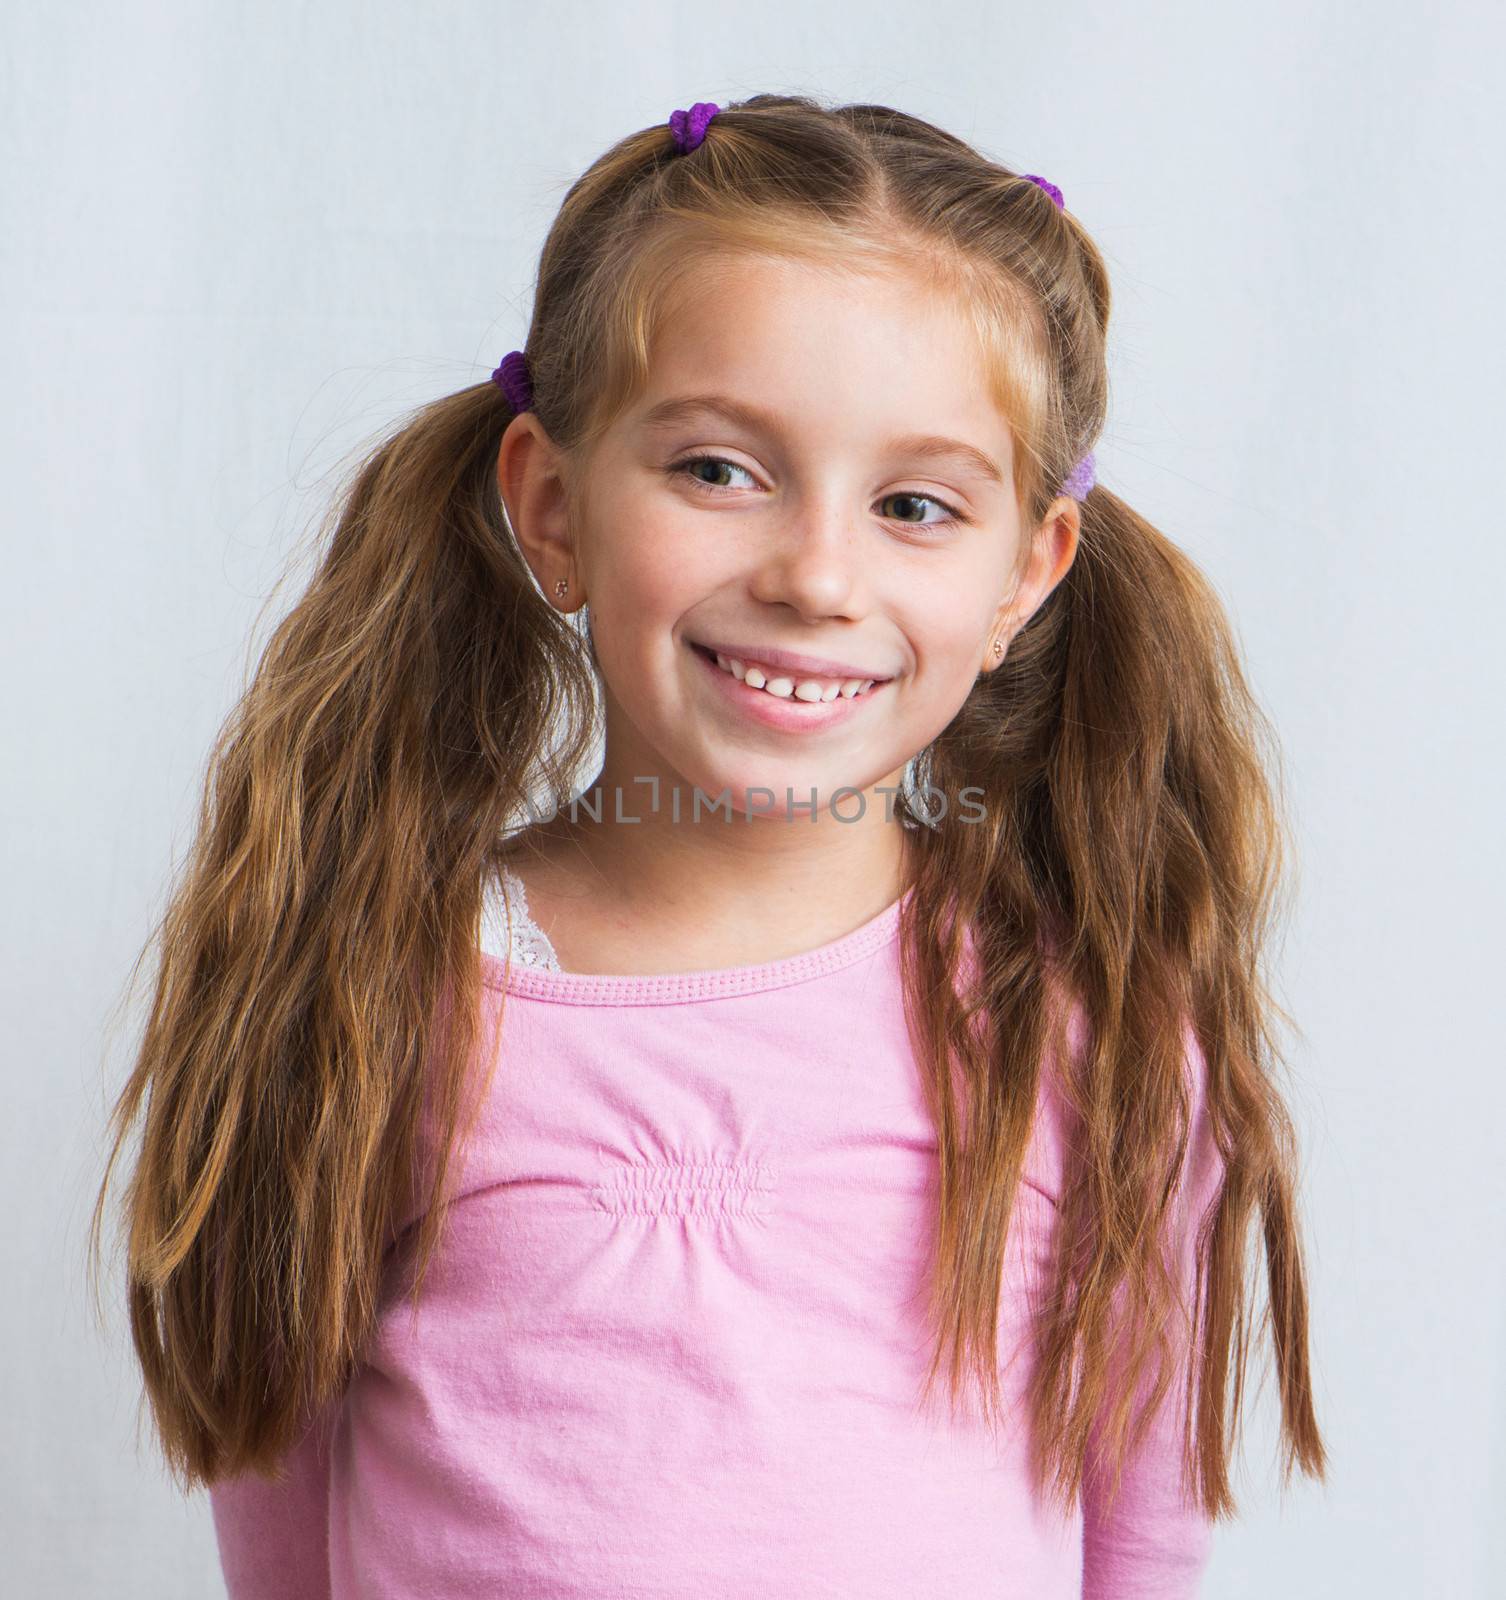 cute little girl smiling portrait close-up